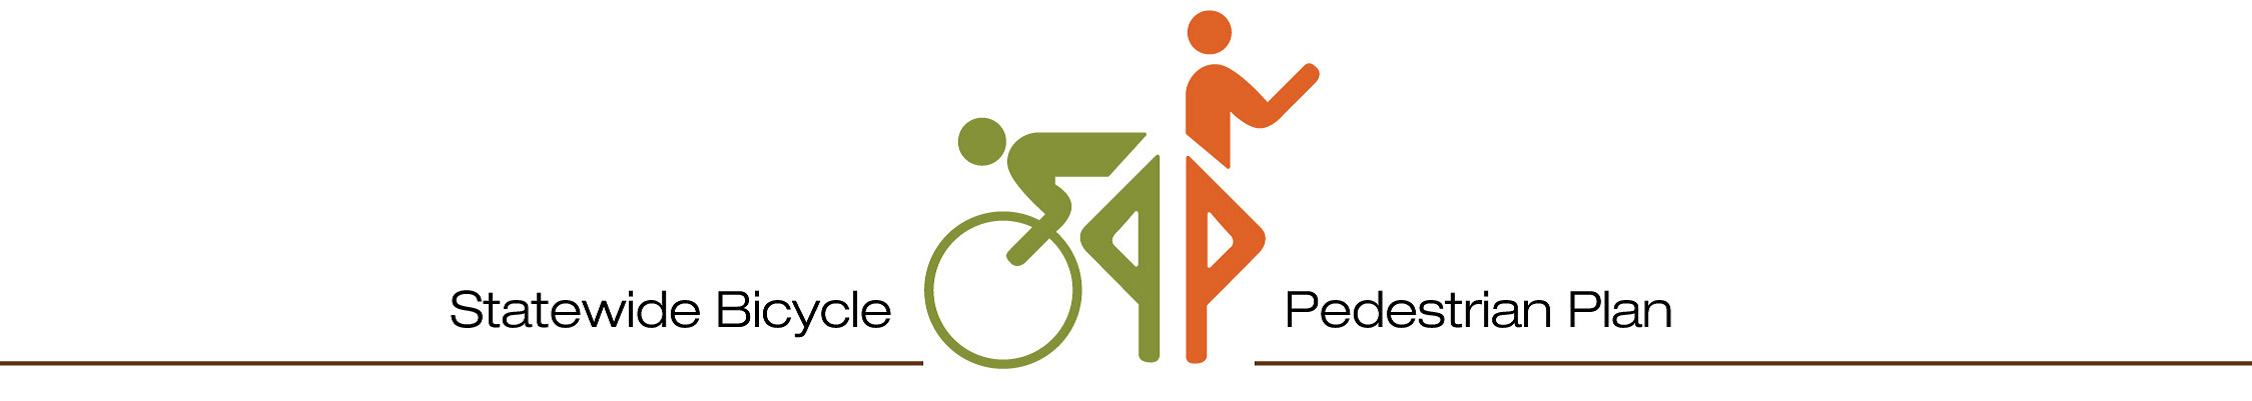 Statewide Bicycle Pedestrian Plan